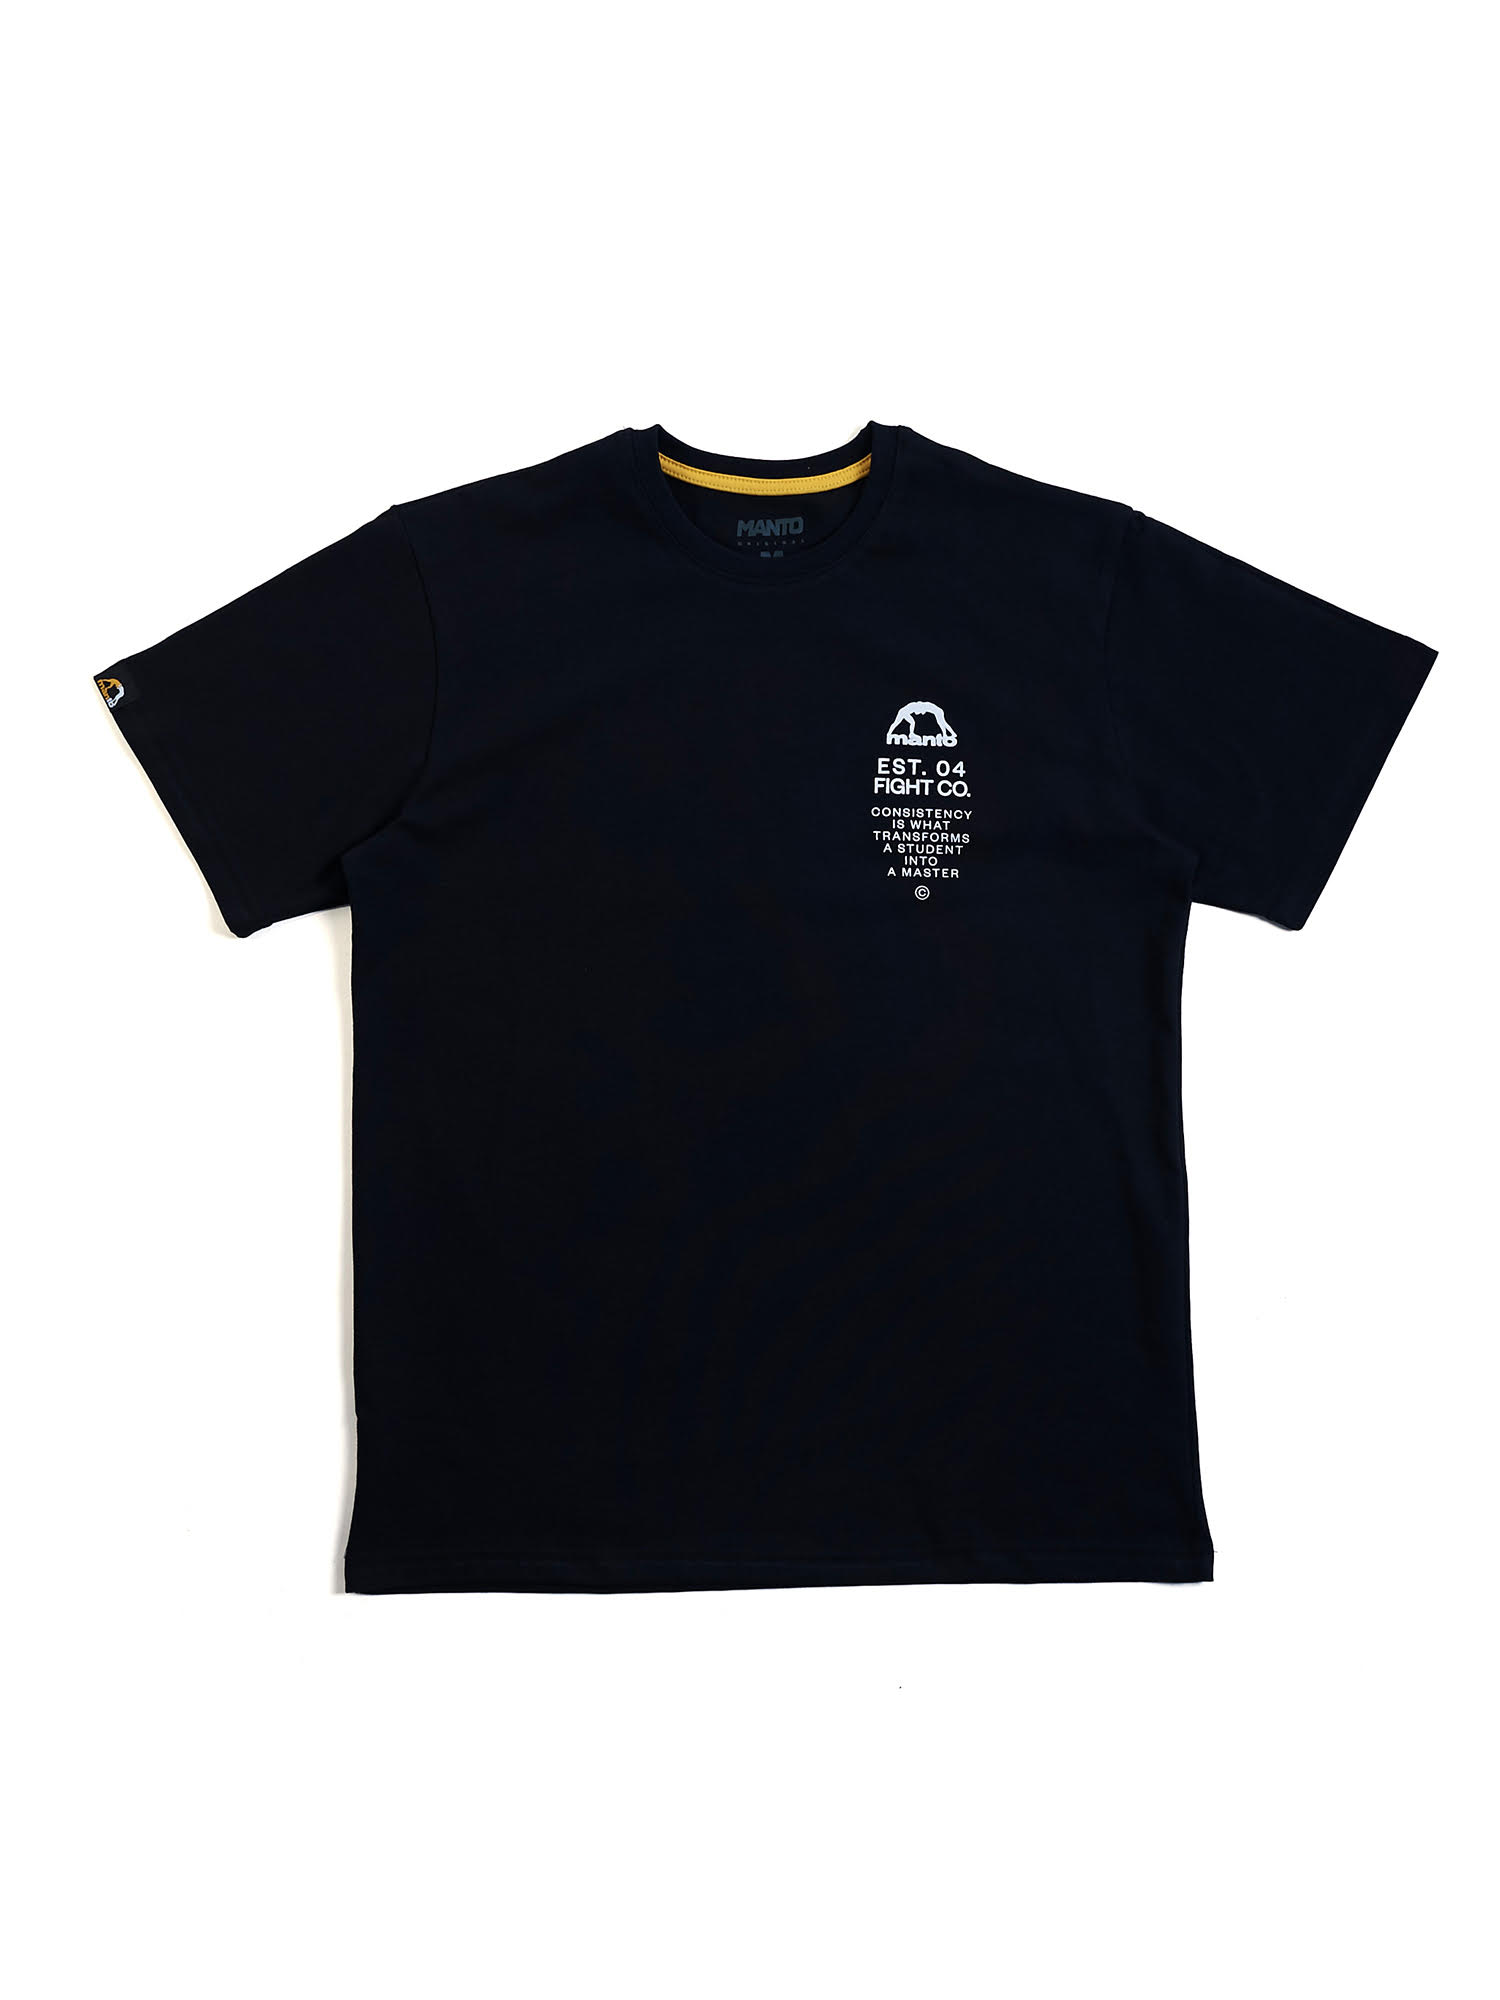 MANTO t-shirt CONSISTENCY black | CLOTHING \ T-SHIRTS | Top Quality ...